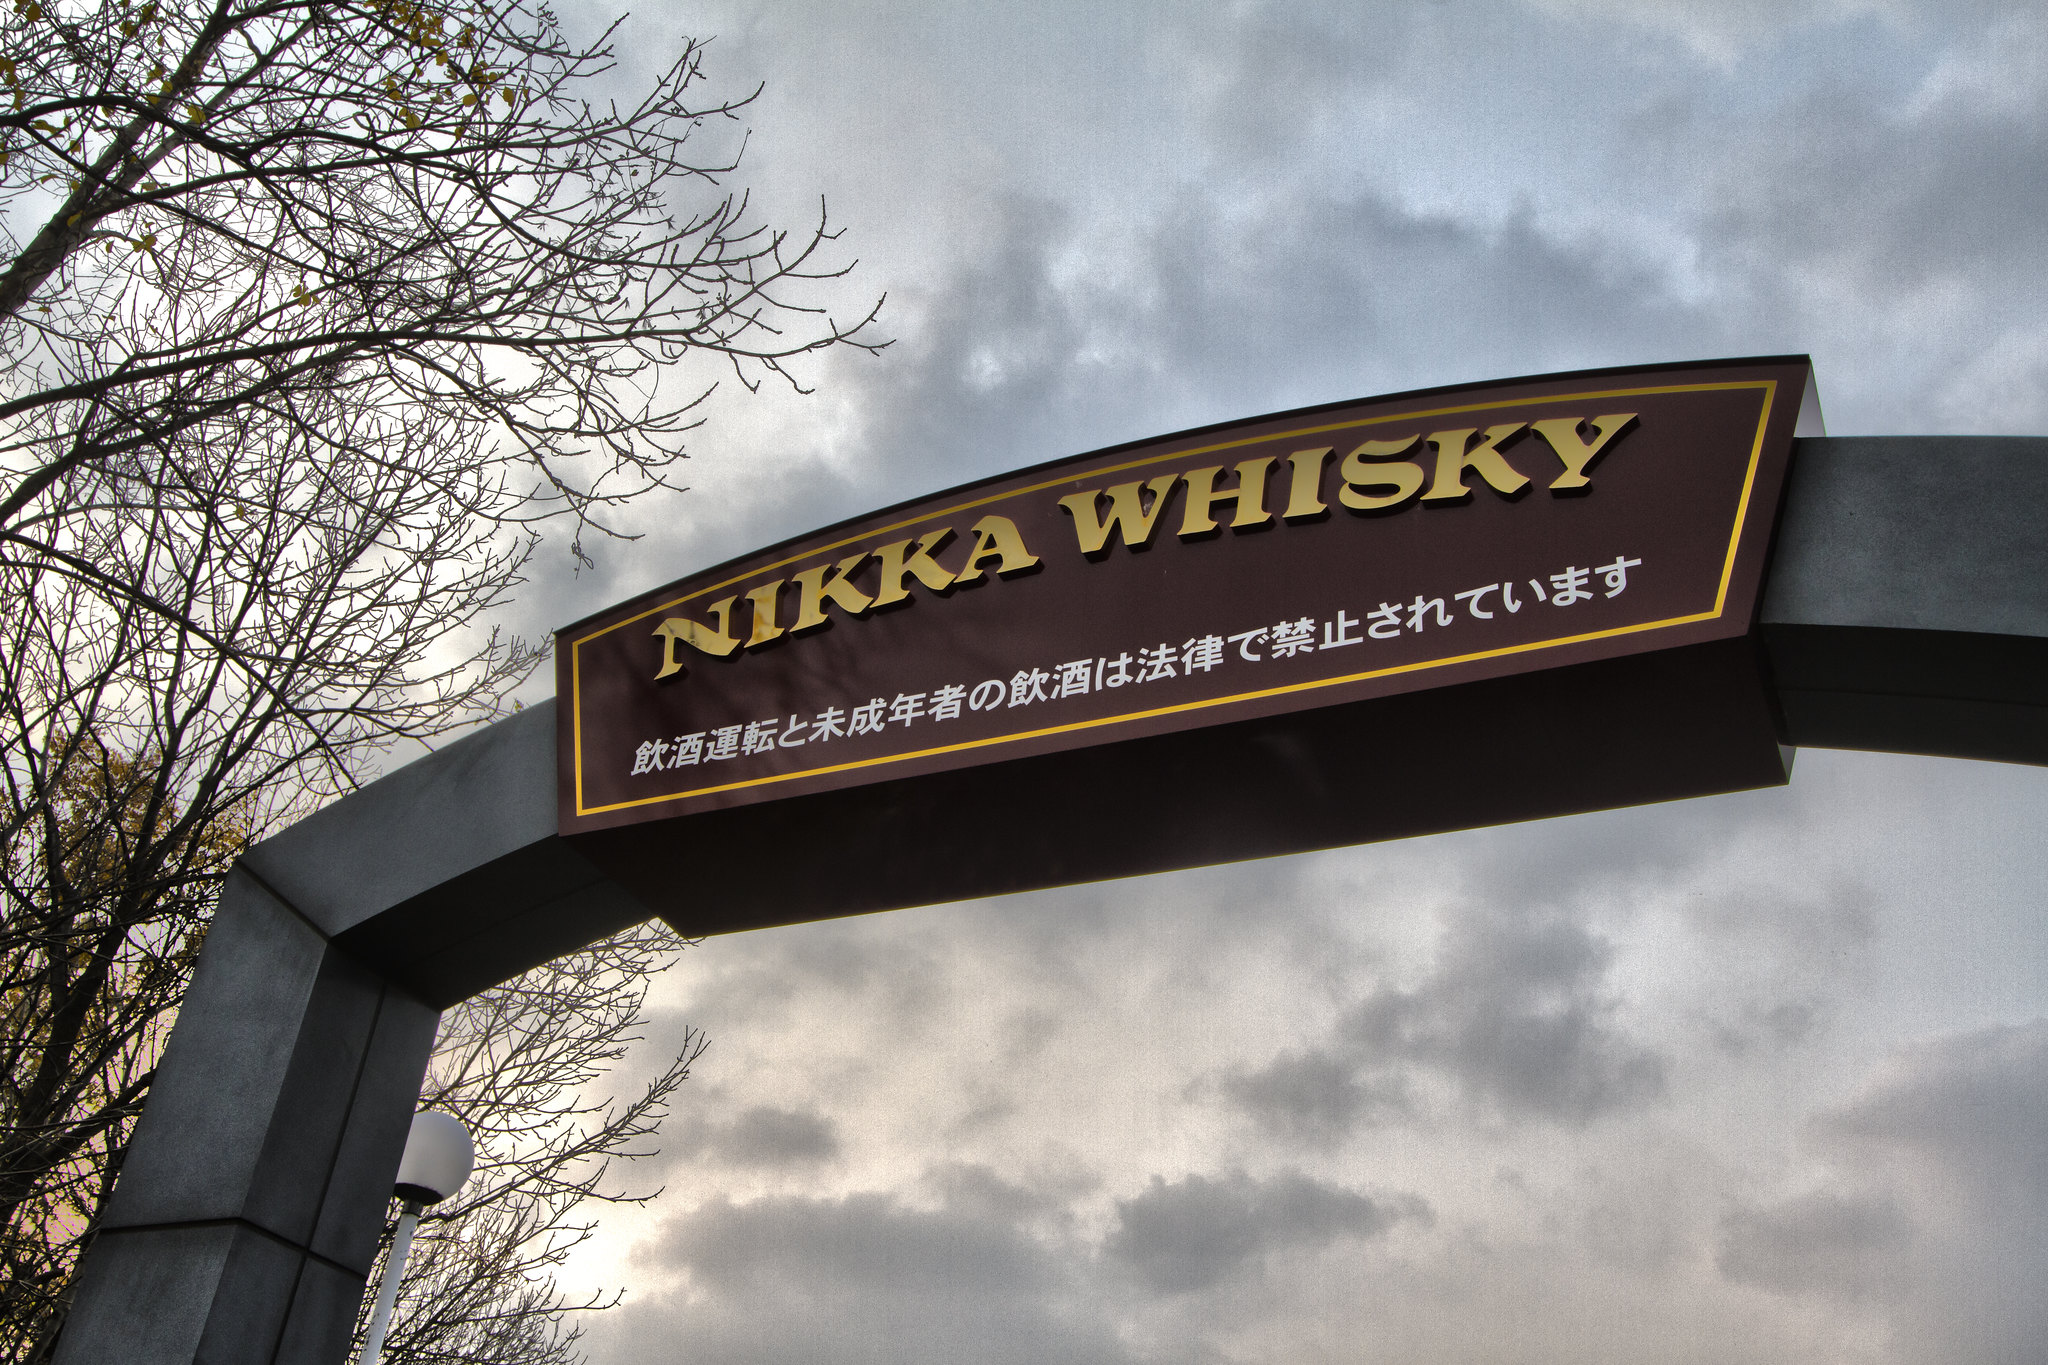 Nikka Whisky Taketsuru PURE MALT 43% Vol. 0,7l in Giftbox : :  Epicerie